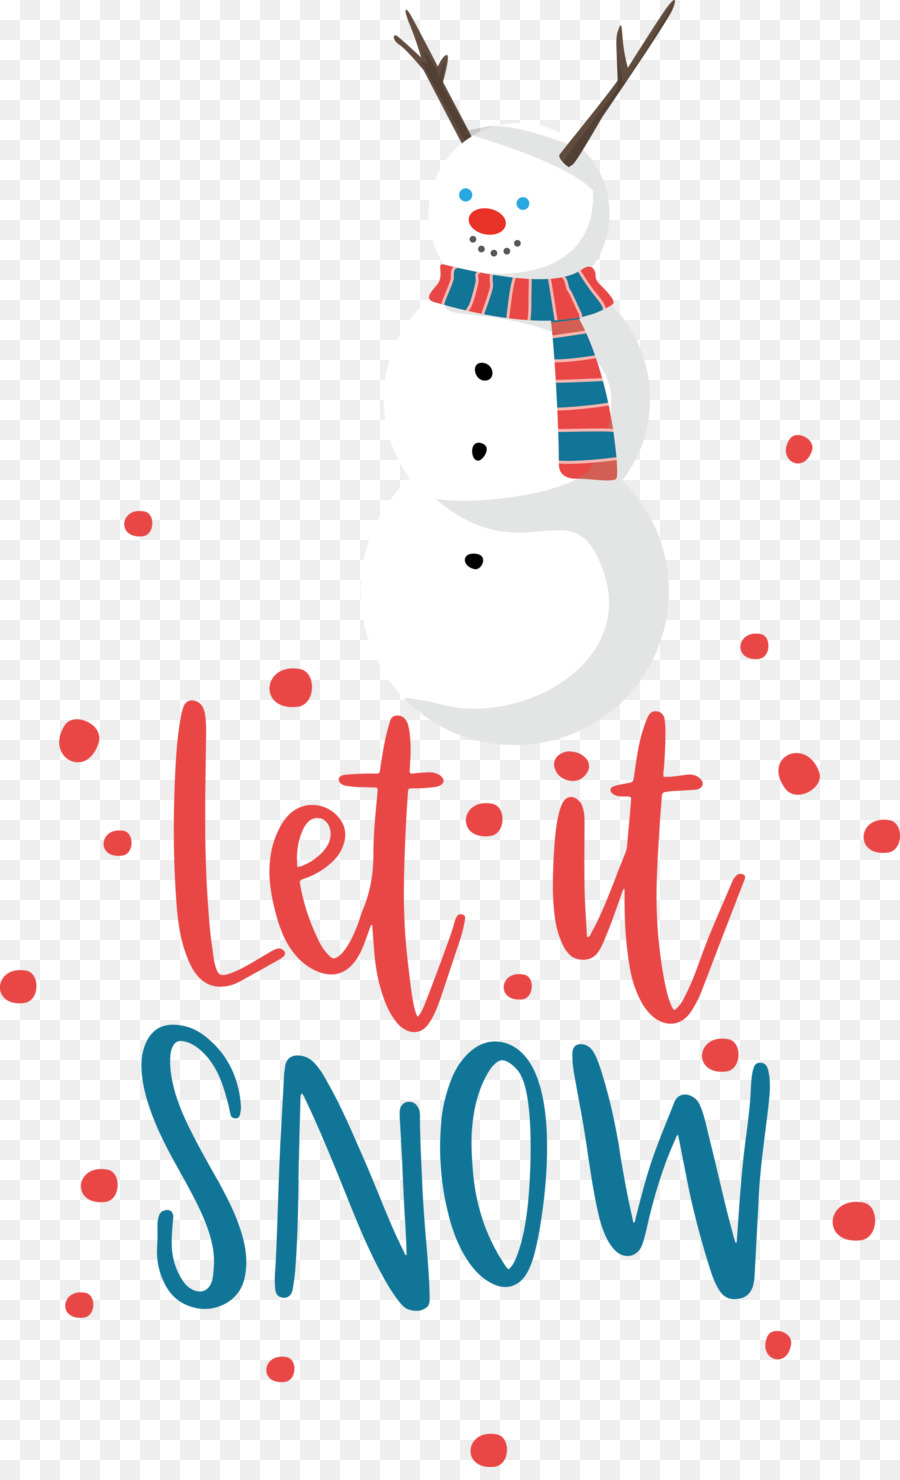 Let it Snow Snow Snowflake